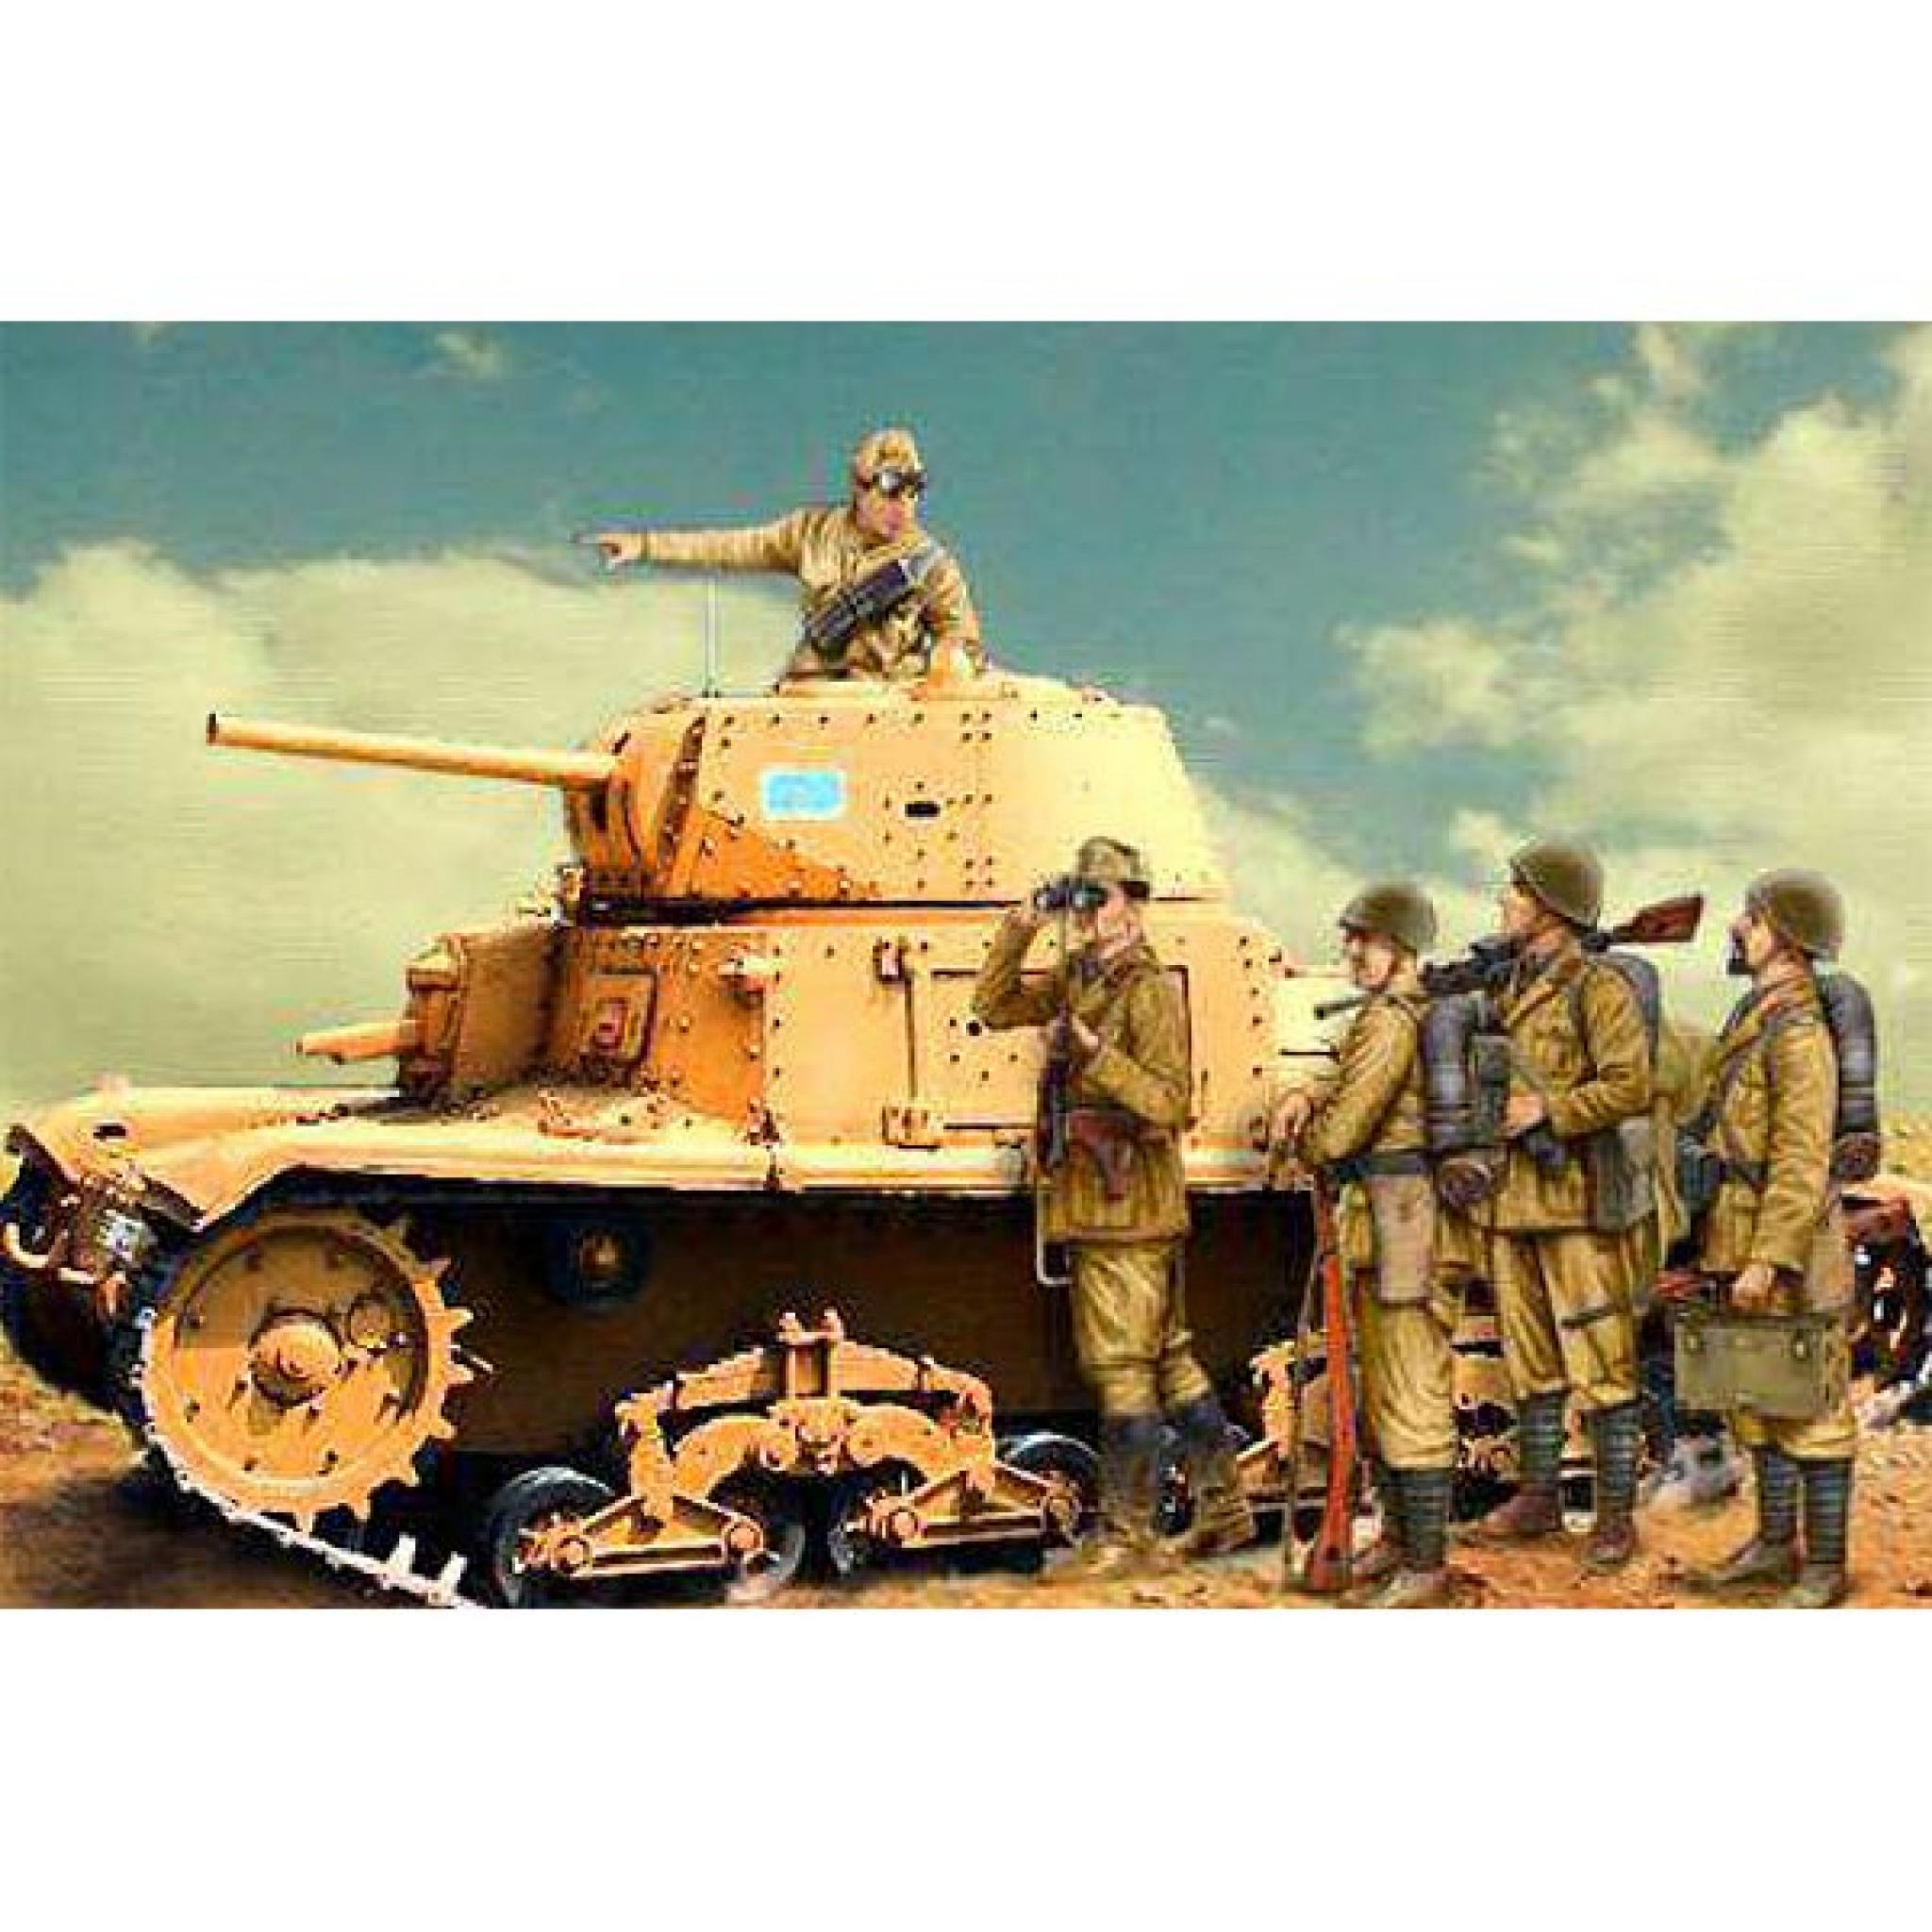 Italeri Carro Armato M14/41 I Series With Italian Infantry 1 35 Model Kit 6543 for sale online